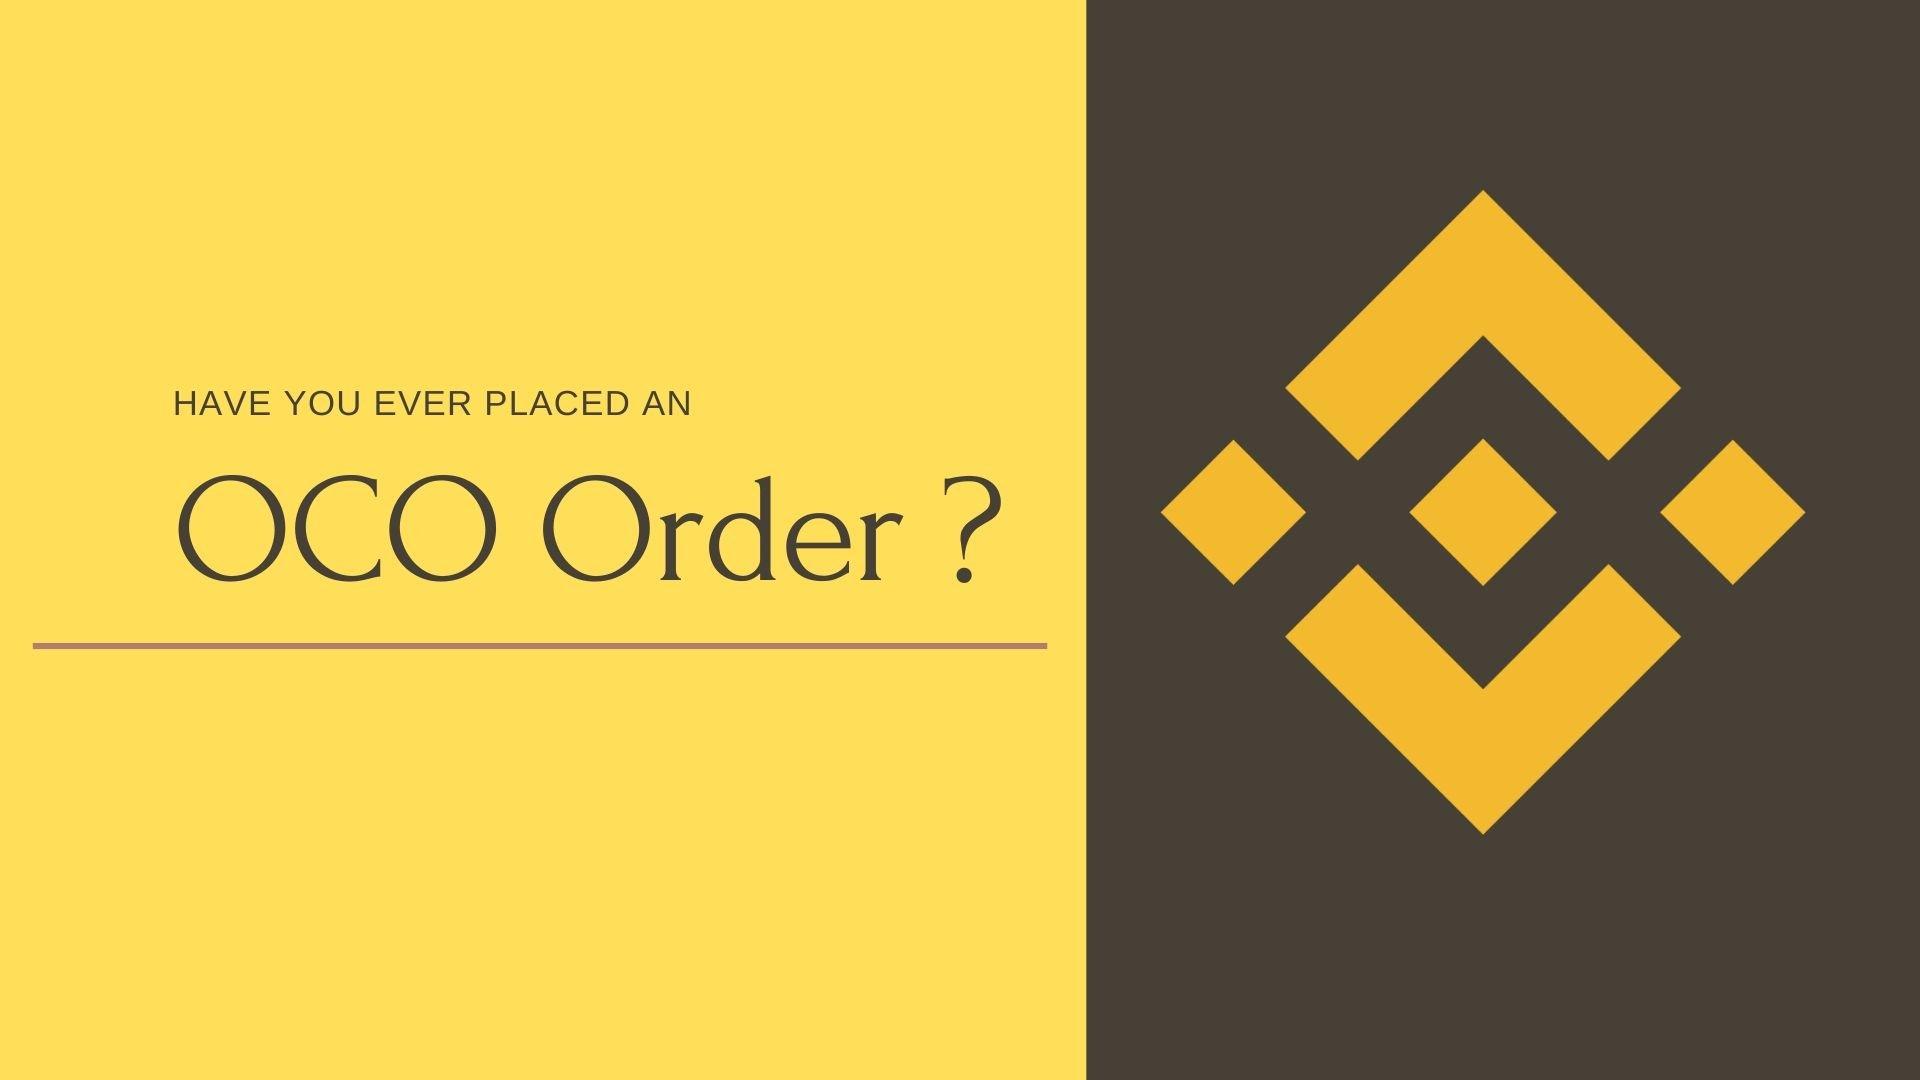 OCO order